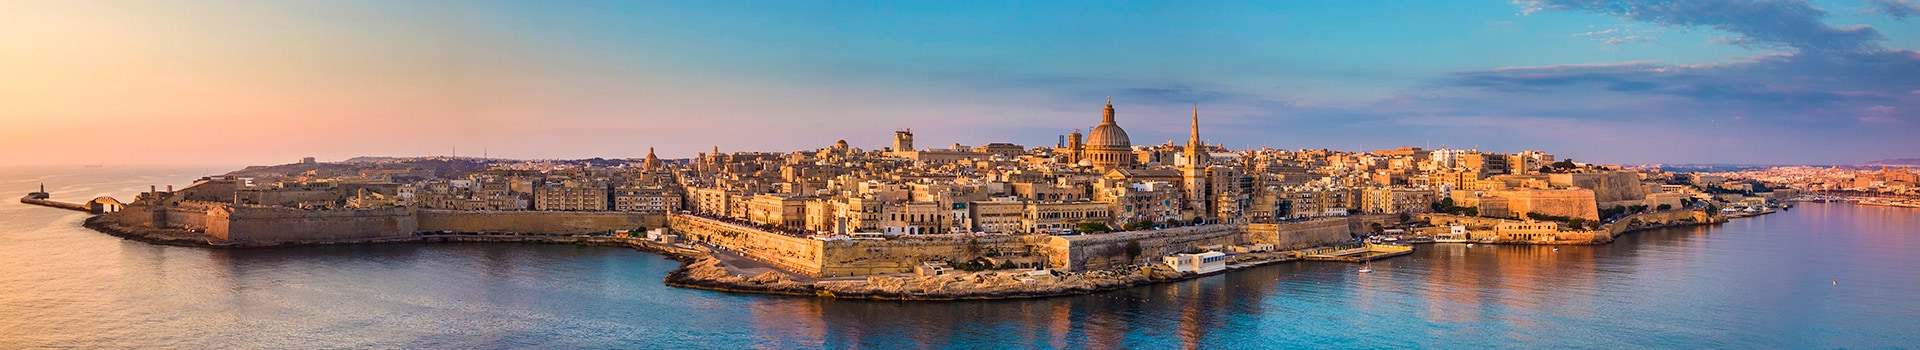 Bari - Malta